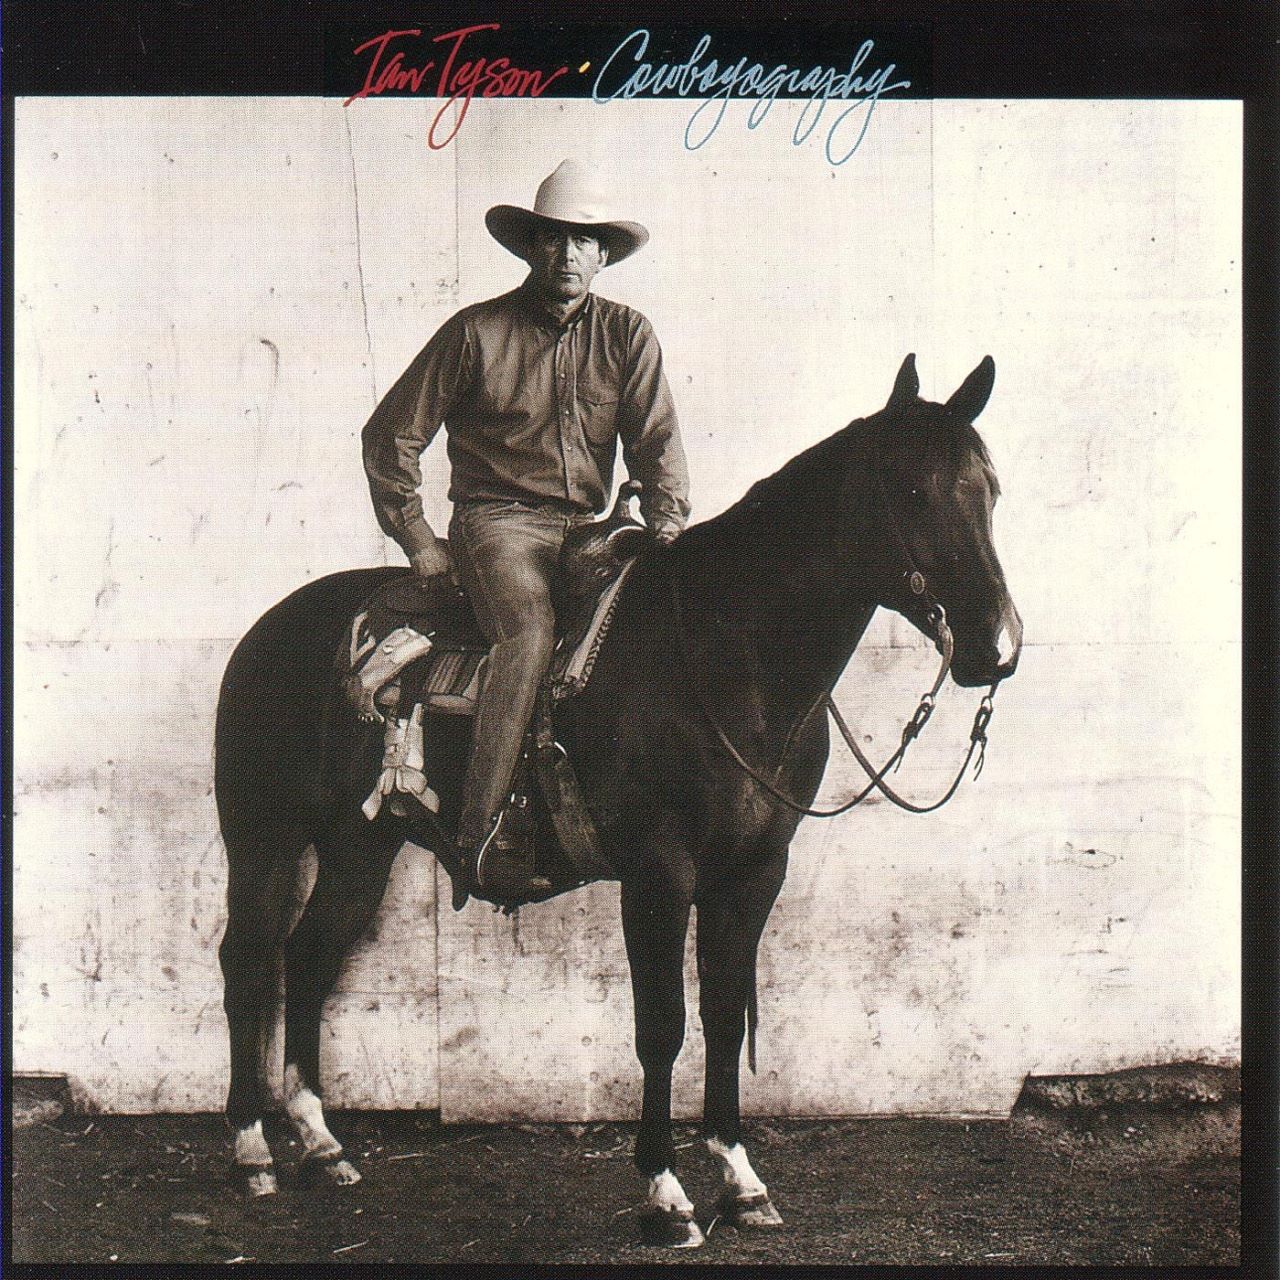 Ian Tyson - Cowboyography cover album